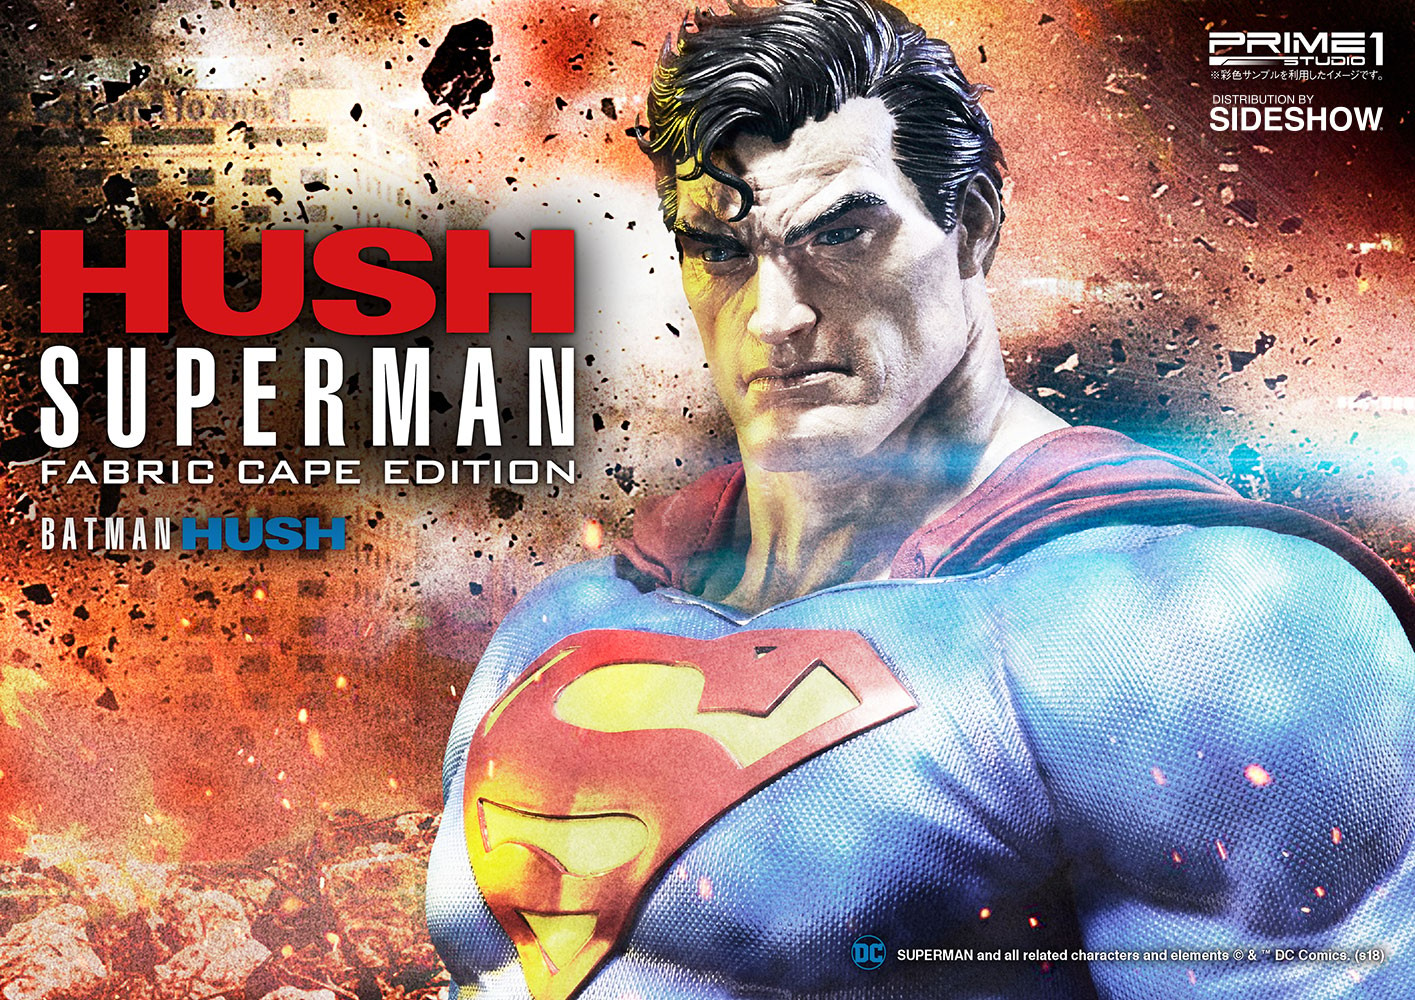 Superman Fabric Cape Edition (Prototype Shown) View 1